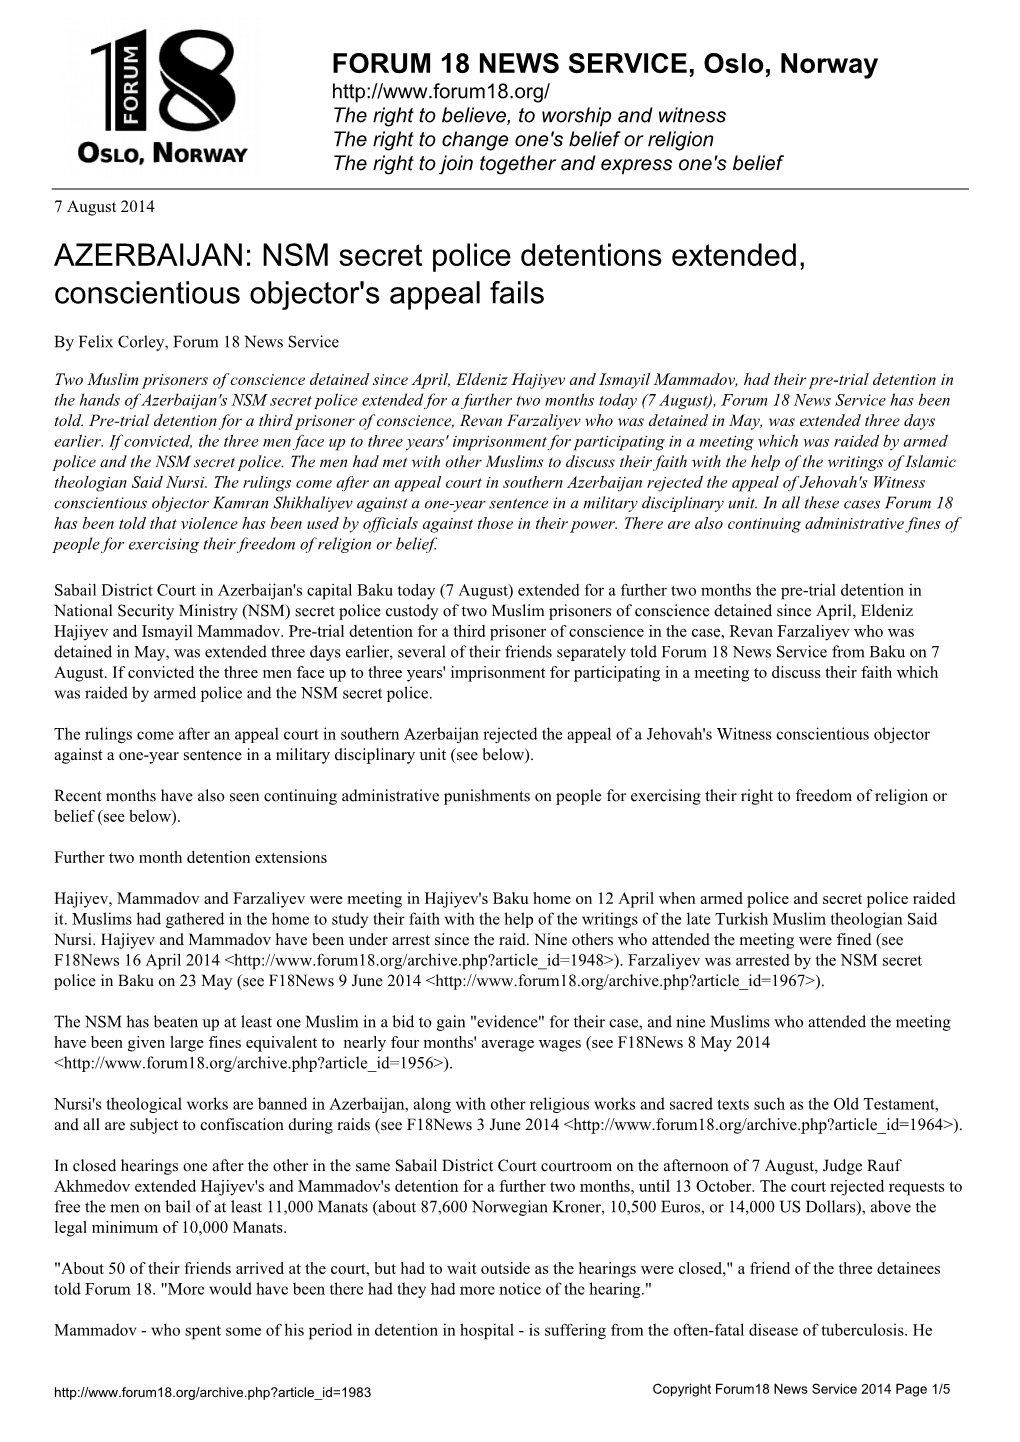 NSM Secret Police Detentions Extended, Conscientious Objector's Appeal Fails